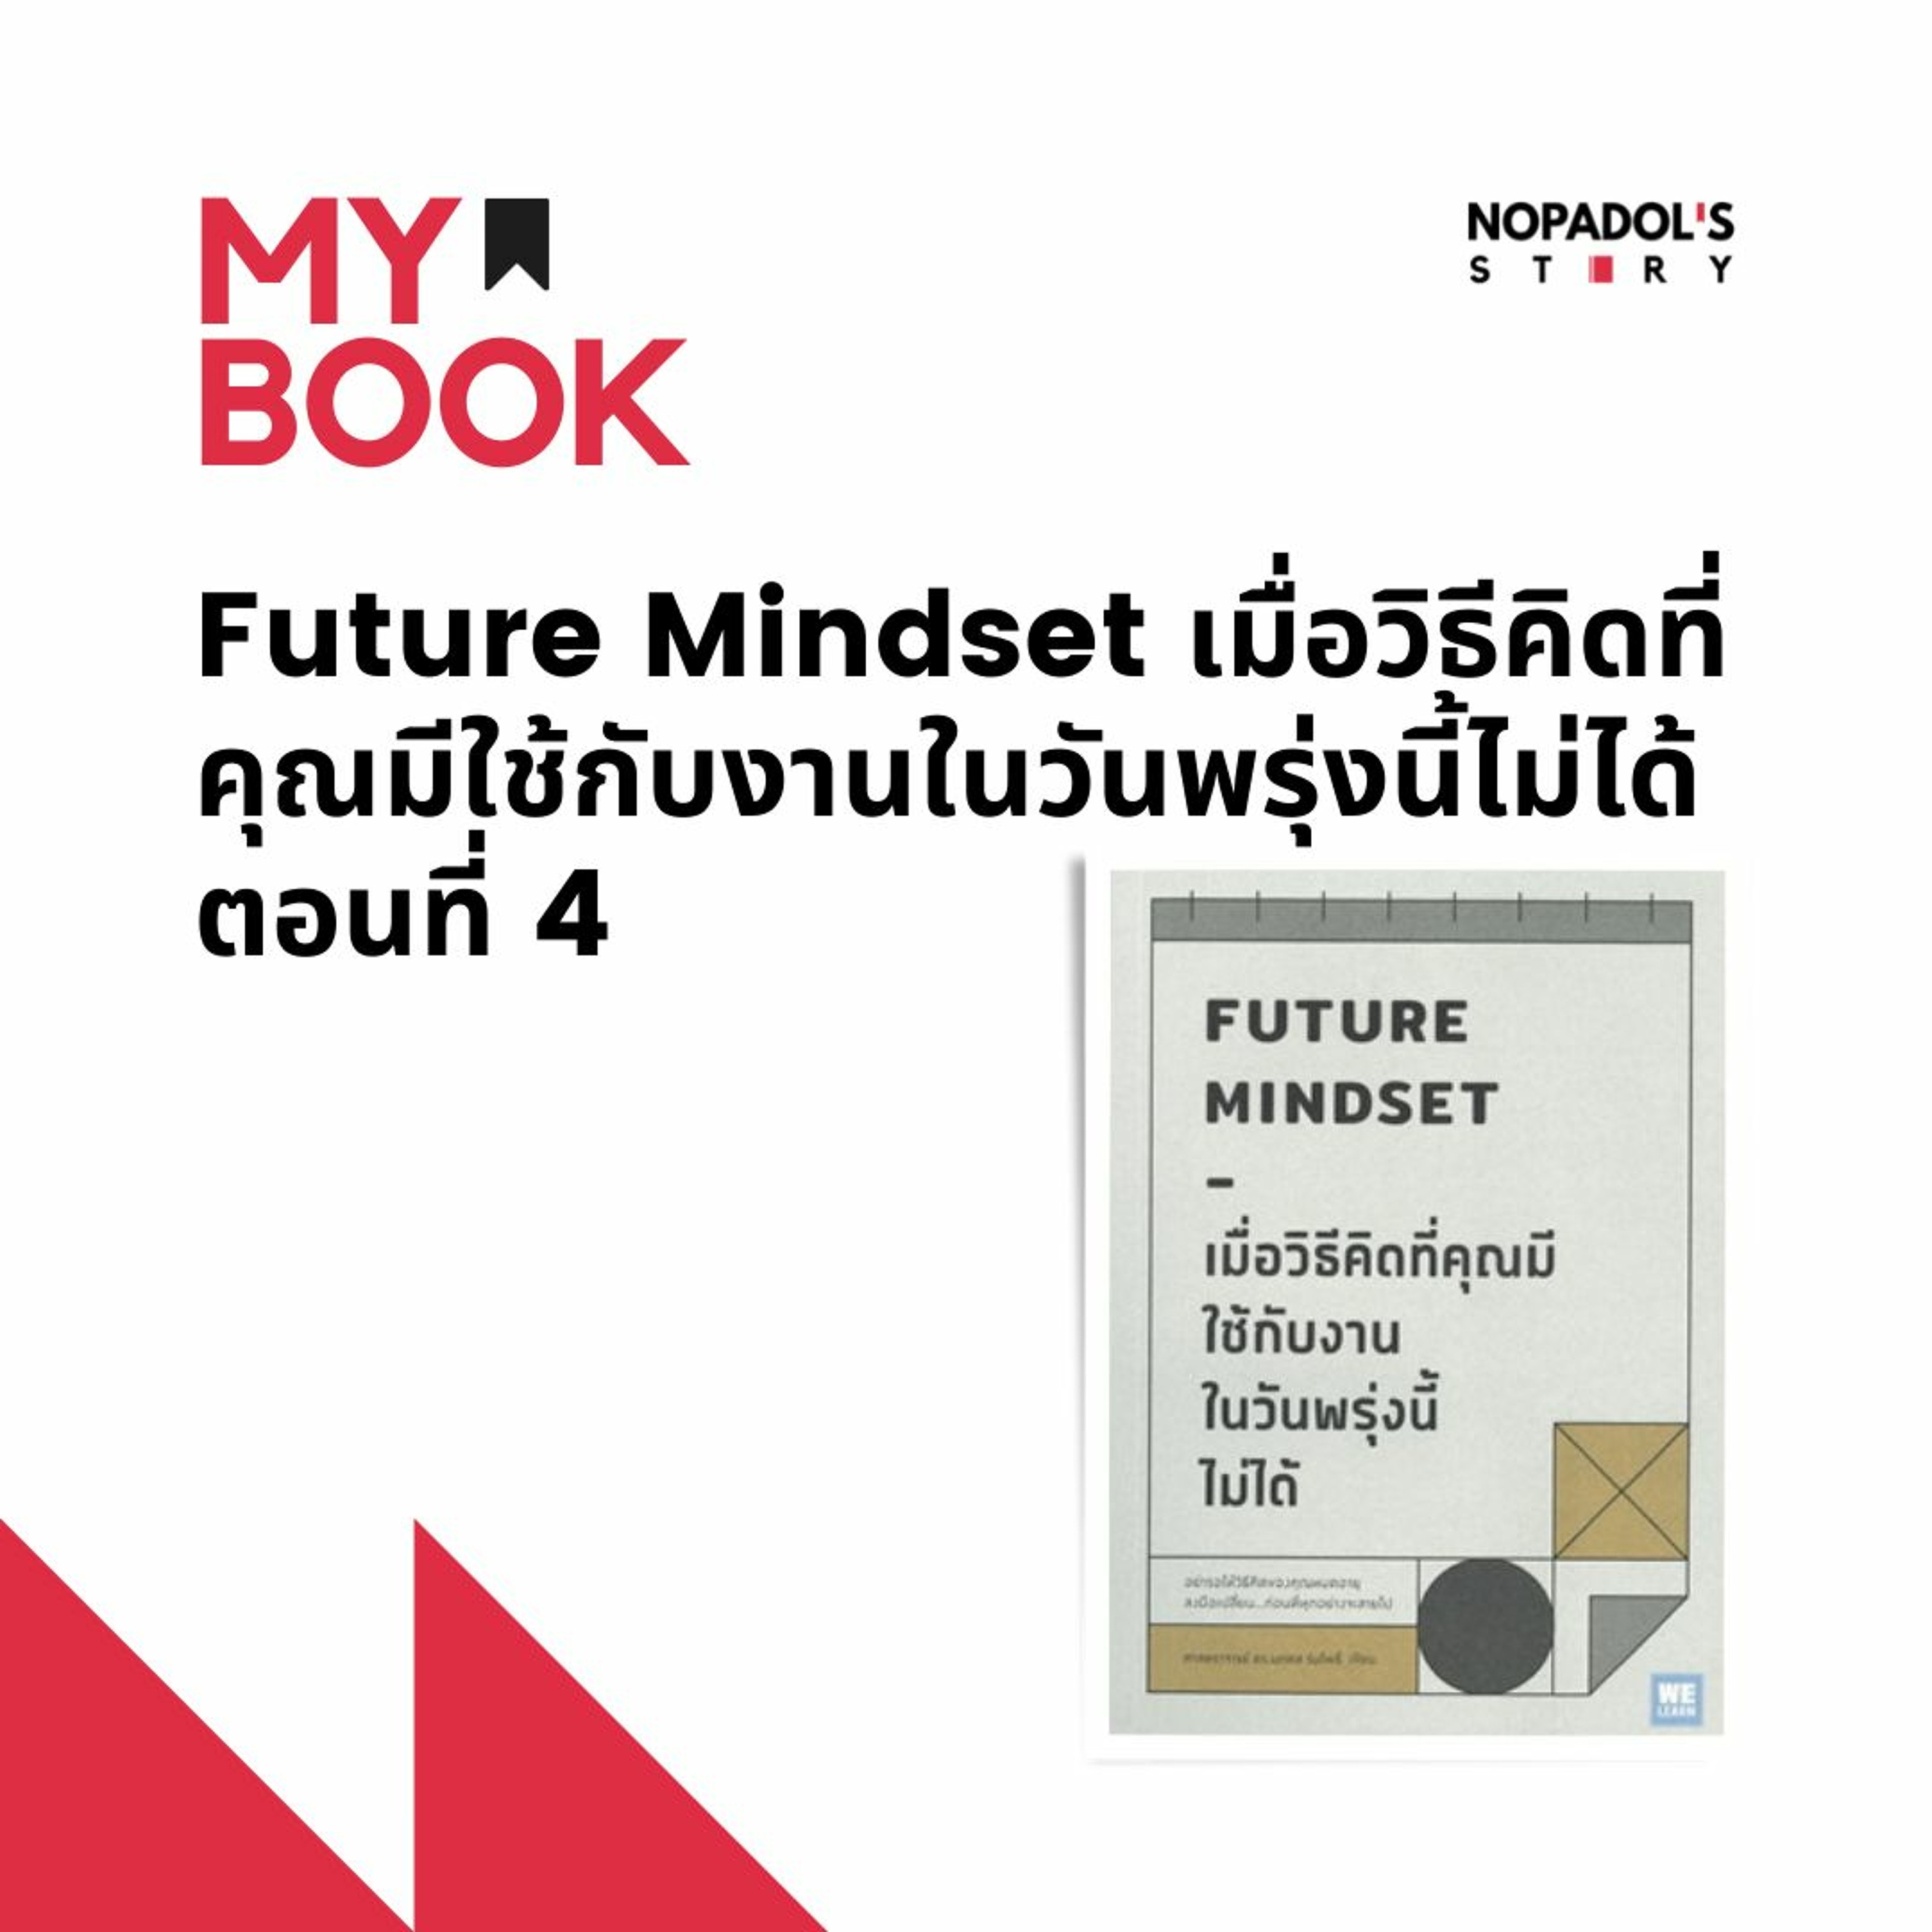 EP 1293 (MB 55) Future Mindset เมื่อวิธีคิดที่คุณมีใช้กับงานในวันพรุ่งนี้ไม่ได้ ตอนที่ 4